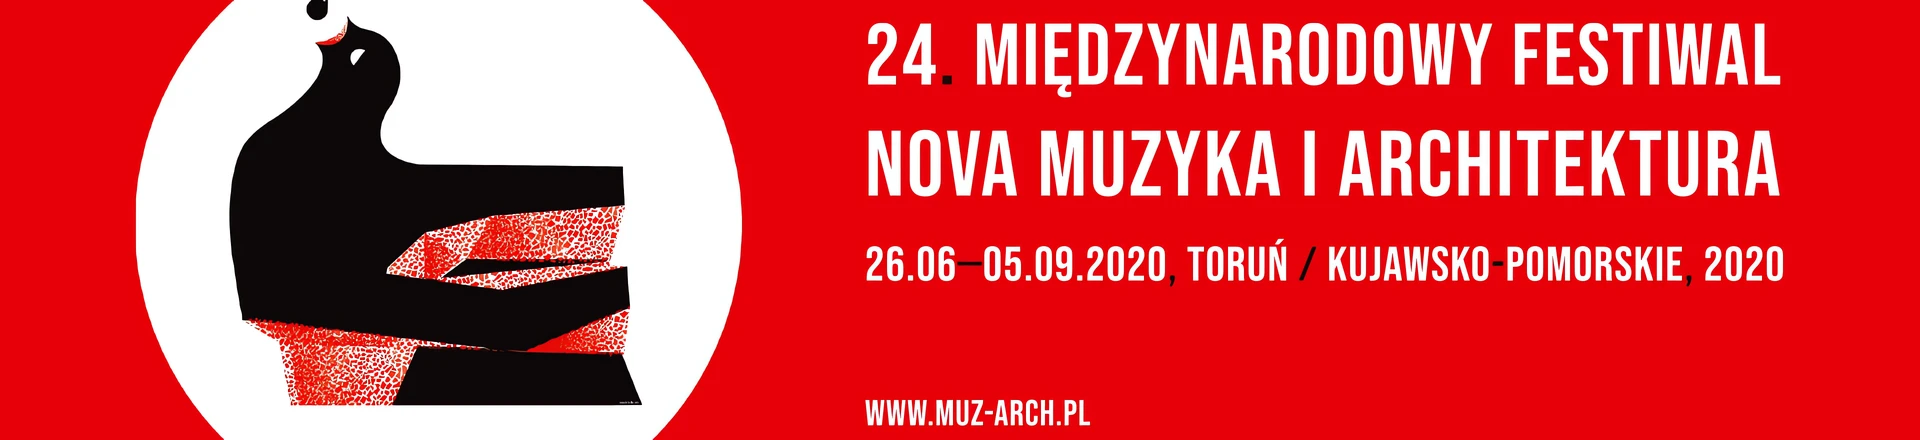 24. Międzynarodowy Festiwal Nova Muzyka i Architektura - Toruń /Kujawsko-Pomorskie 2020